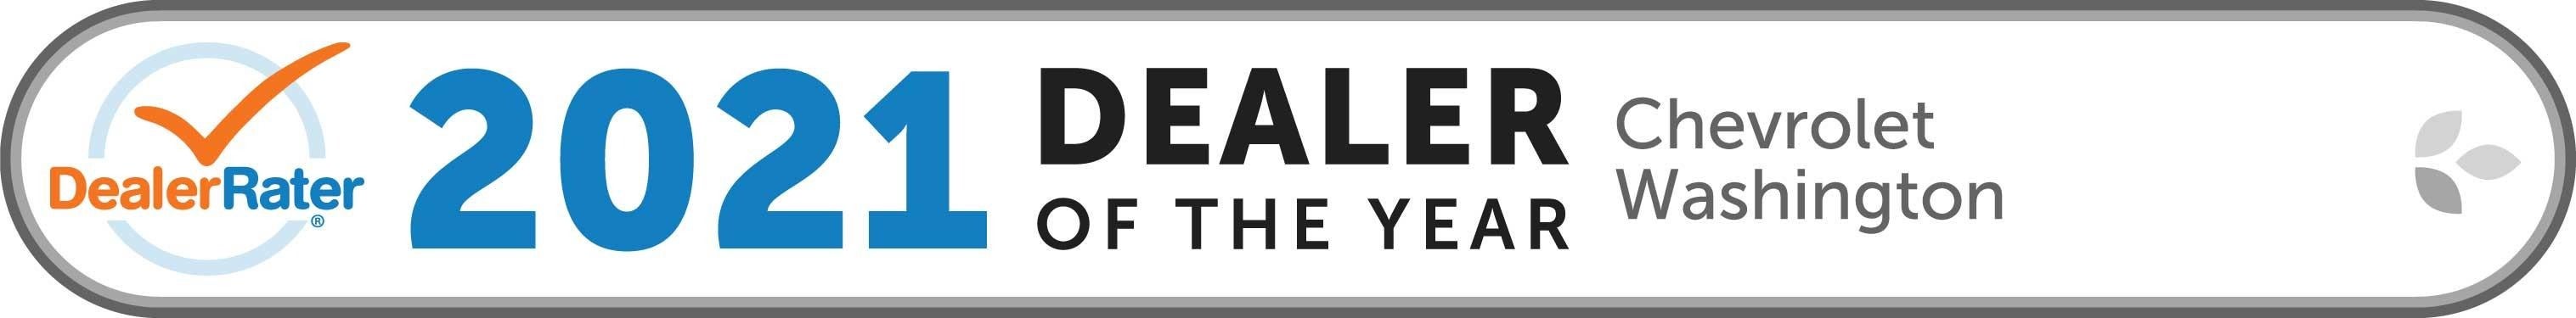 2021 DealerRater Dealer of the Year Alan Webb Chevrolet in Vancouver WA